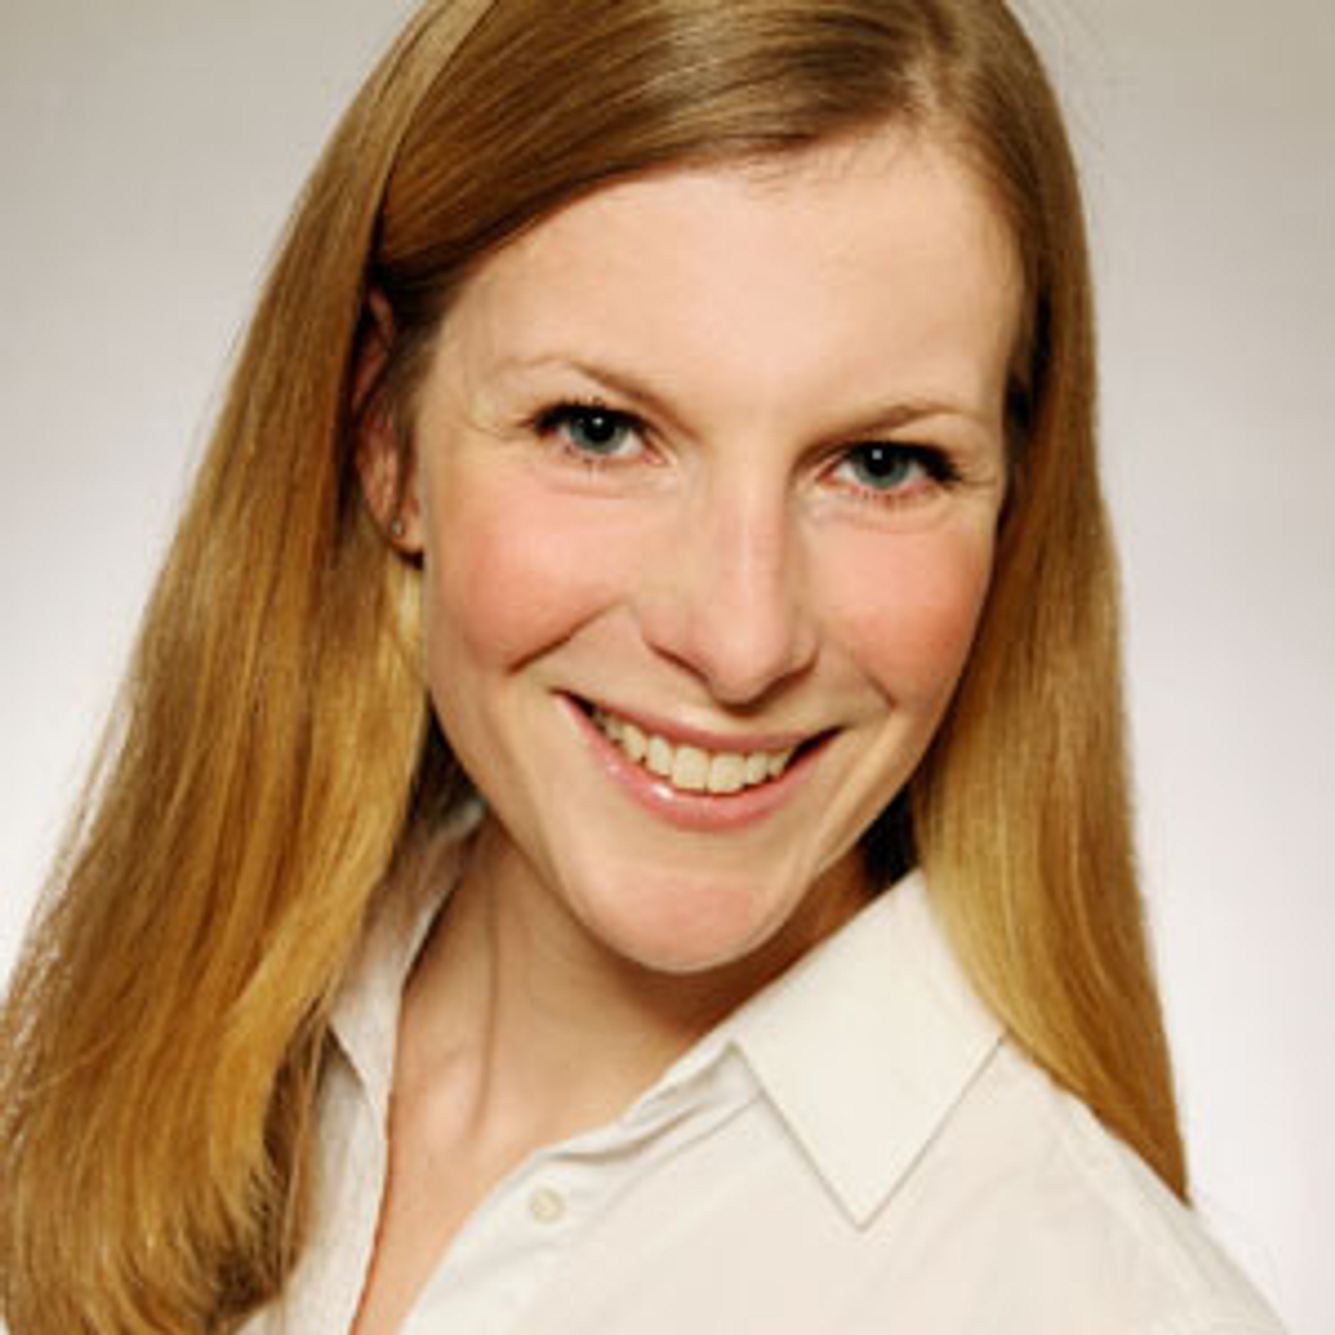 Dr. Nadine Hess